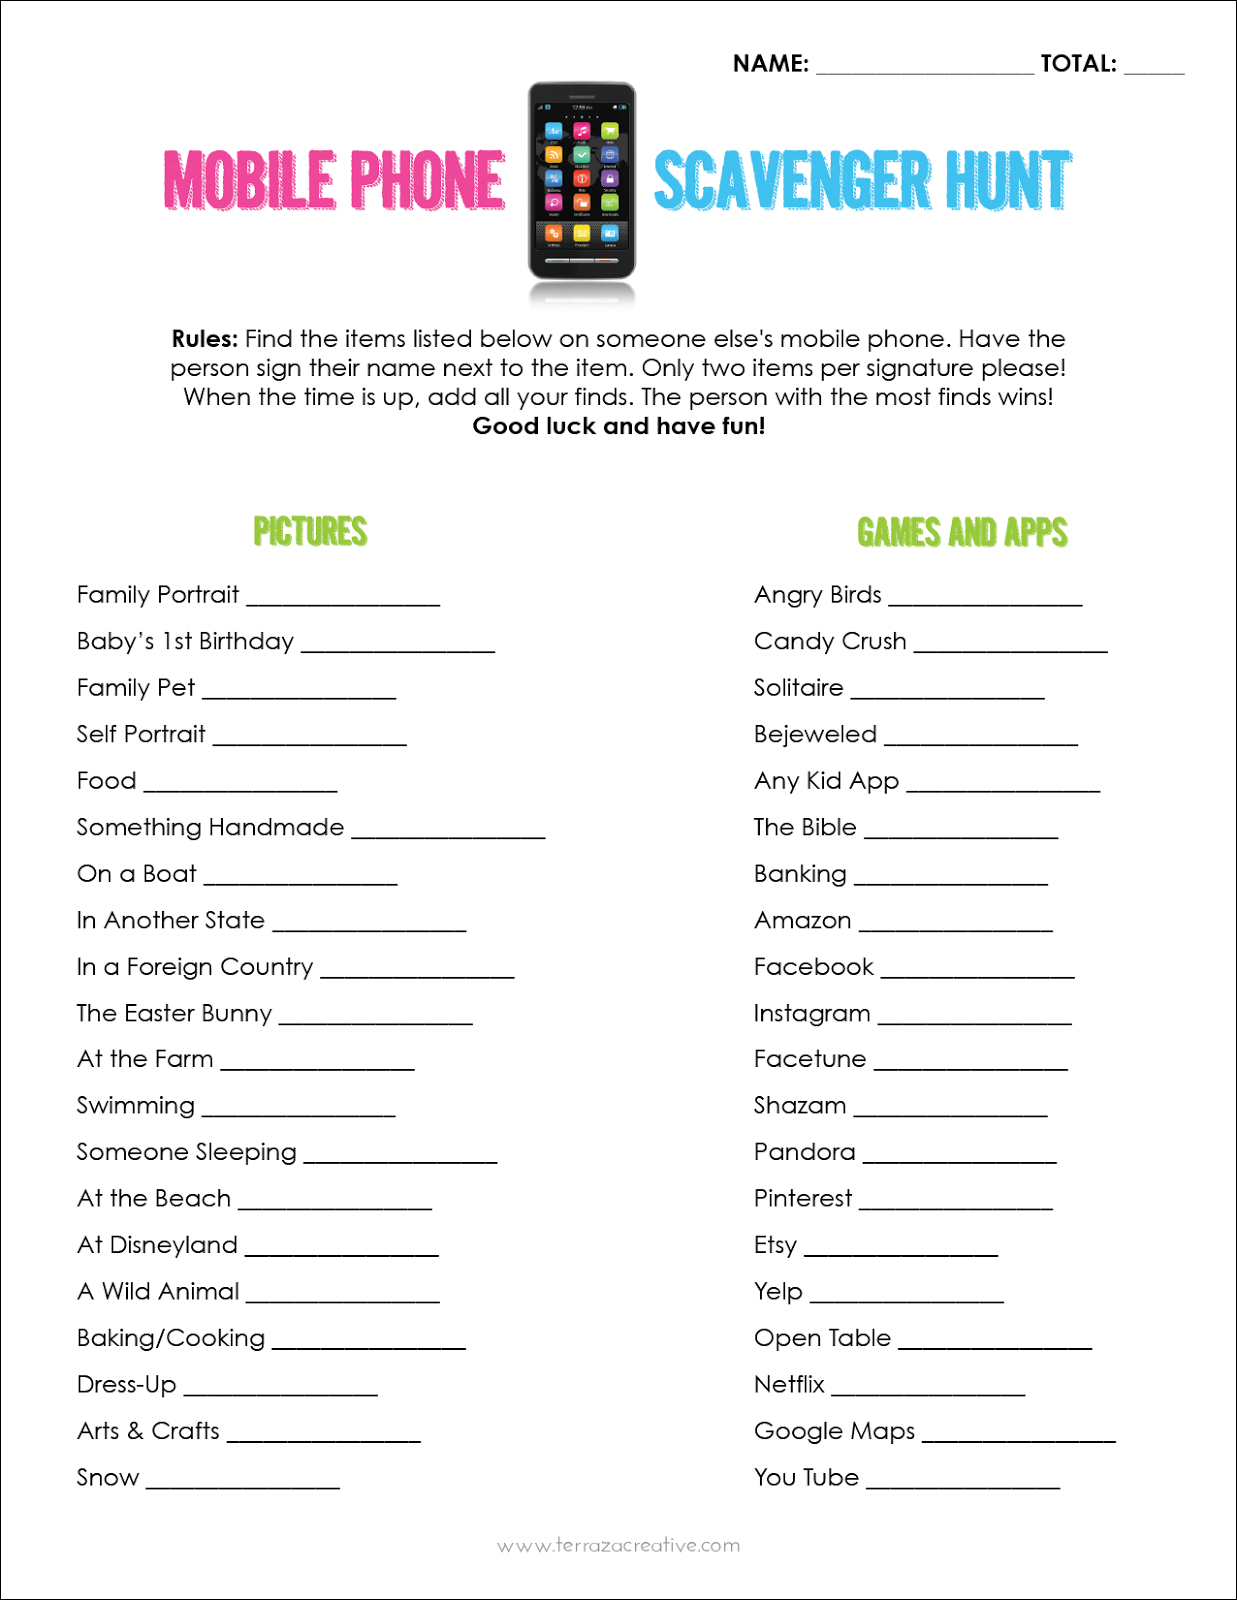 Mobile Phone Scavenger Hunt - Free Printable | A Fierce Flourishing - Retirement Party Games Free Printable